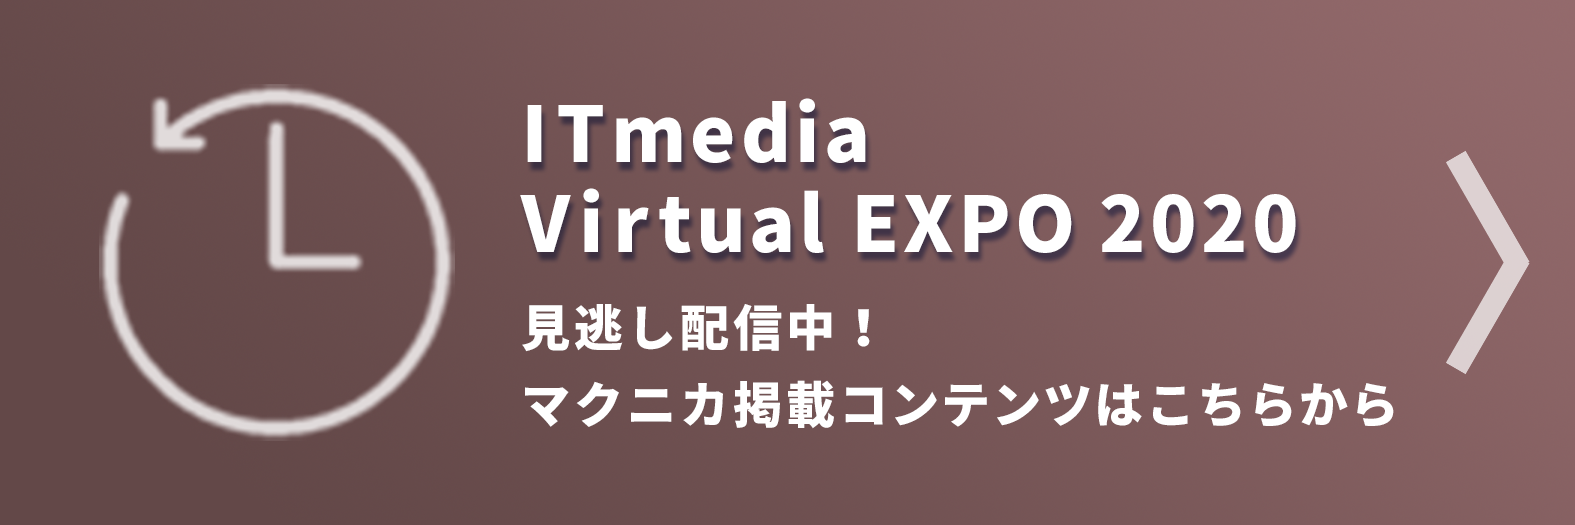 ITmedia Virtual EXPO 2020 マクニカ掲載コンテンツ見逃し配信